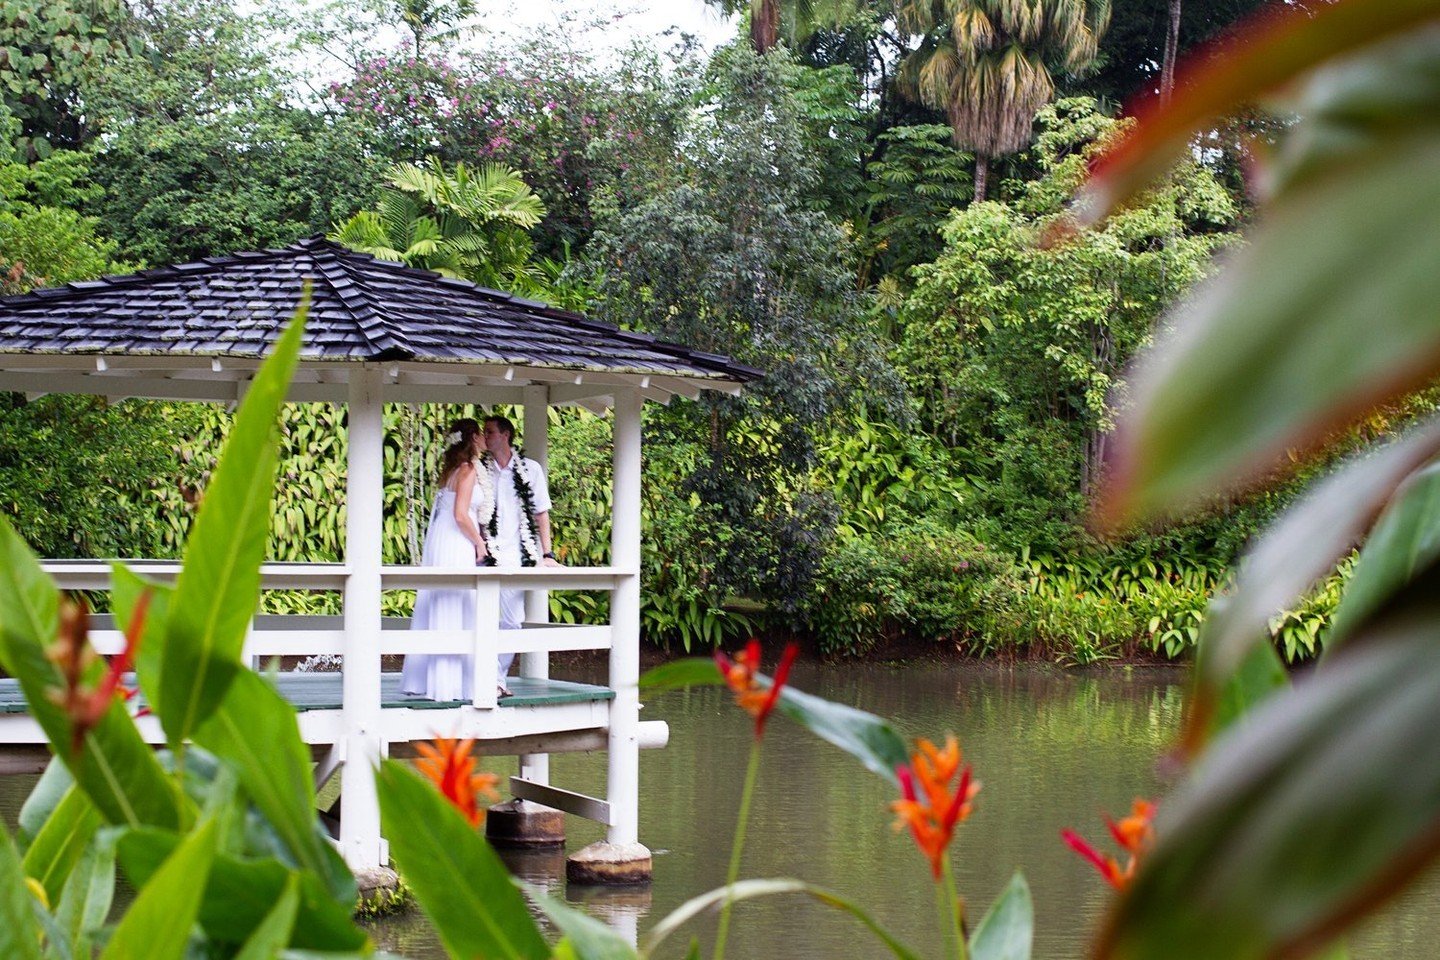 Riverside Romance: Jen and Jason's Enchanting Haiku Garden Wedding, Captured by Jolene Kaneshige Photography
Read More: https://www.jolenekaneshige.com/blog/riverside-romance-jen-and-jasons-enchanting-haiku-garden-wedding 

#DestinationWedding #Hawai